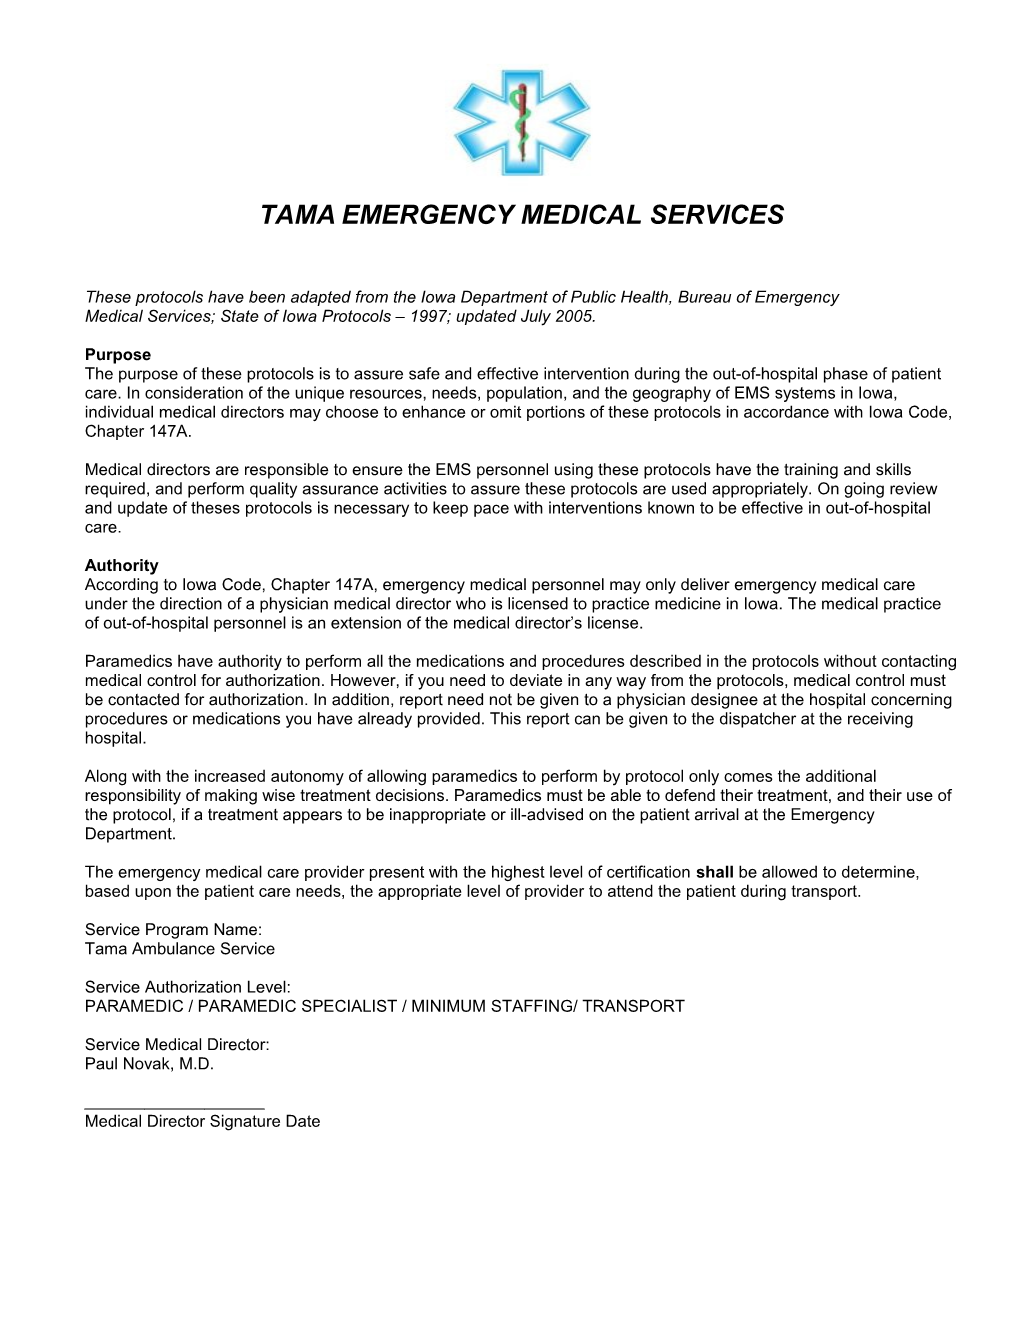 Tamaemergency Medical Services